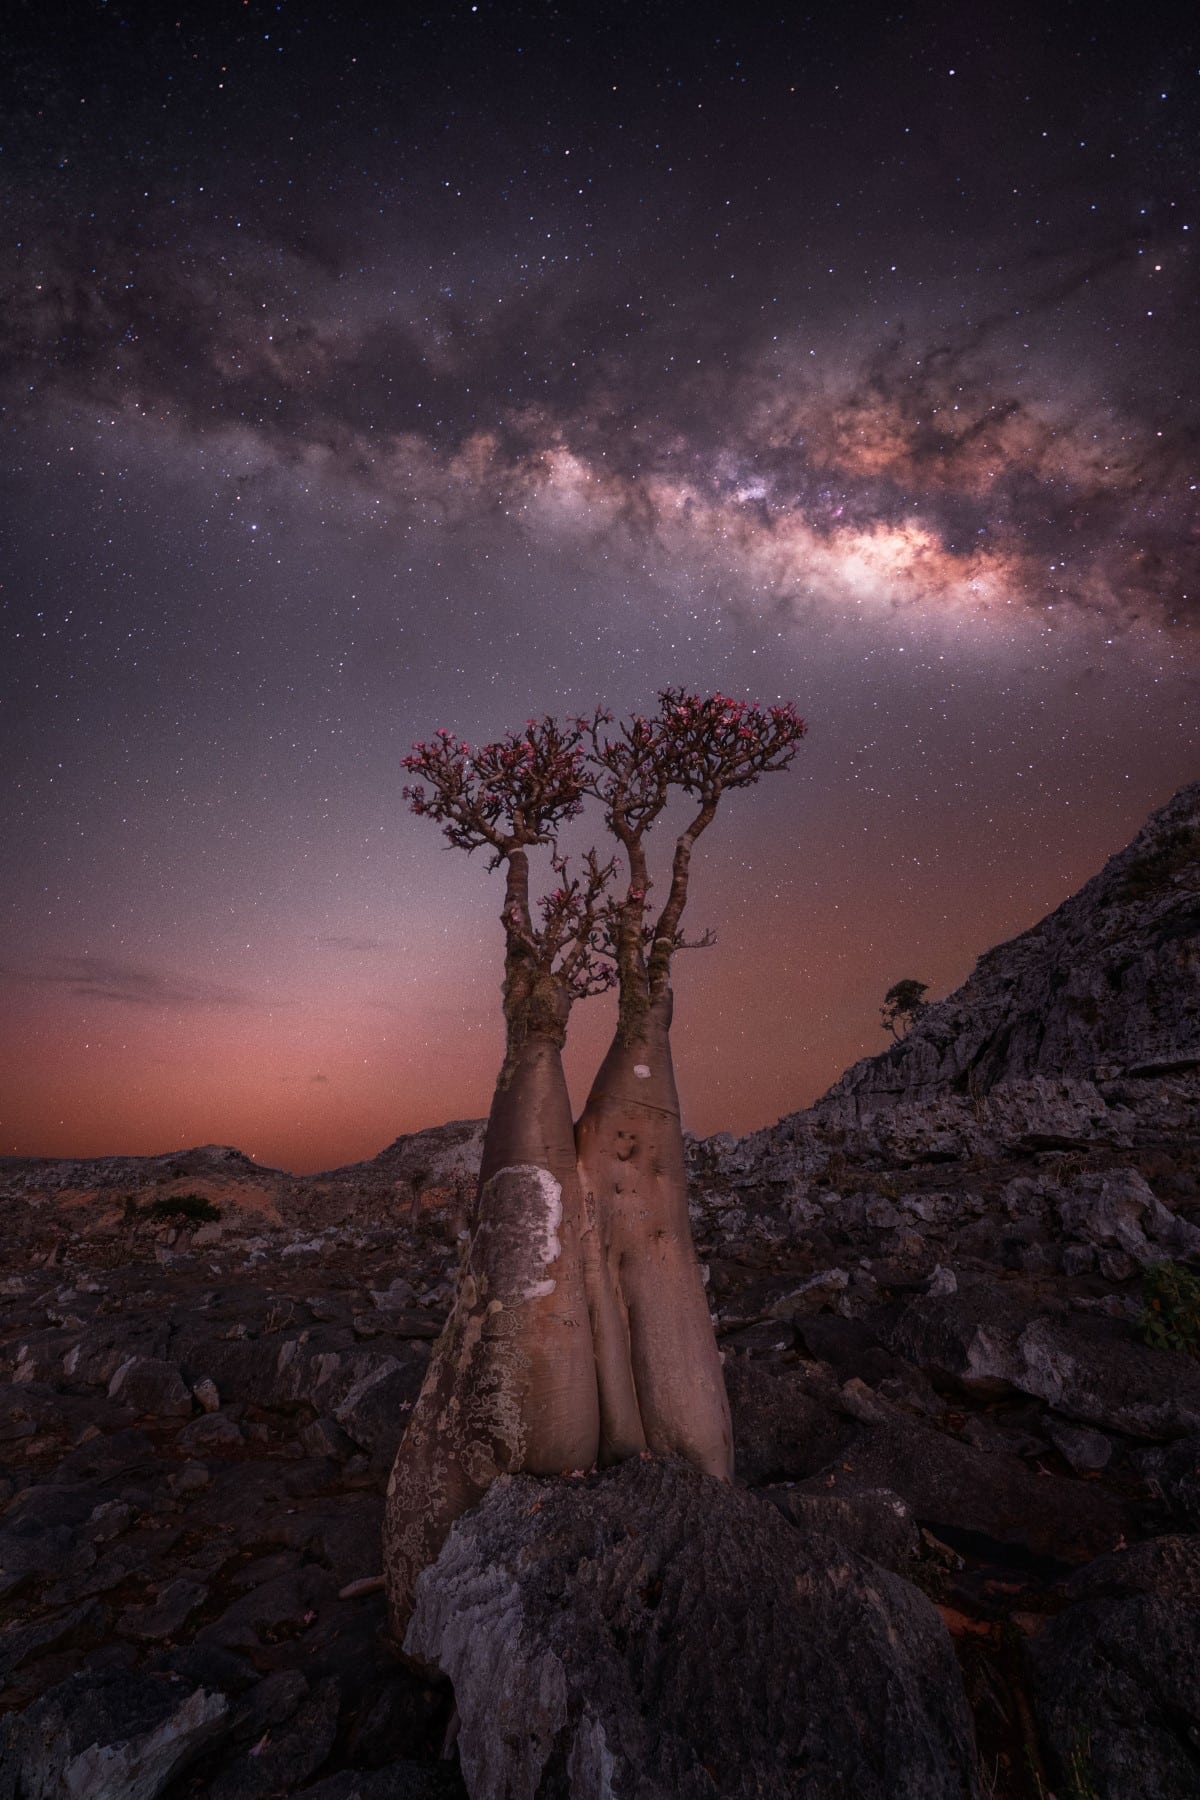 Milky Way over tree in Socotra Island, Yemen